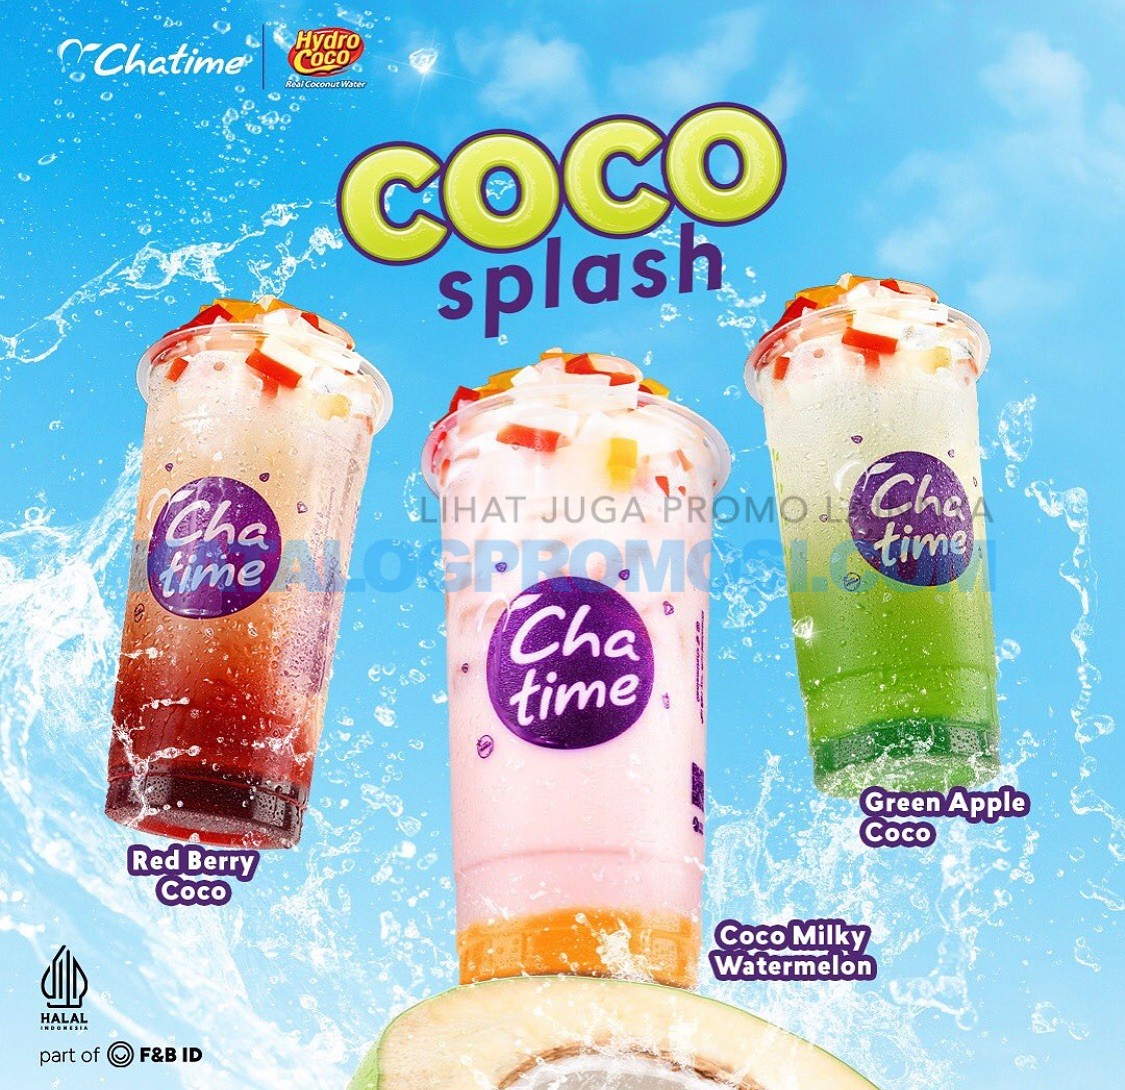 BARU Promo CHATIME x Hydro Coco - Coco Splash Series, 3 menu terbaru dari Chatime kolaborasi bersama Hydro Coco.